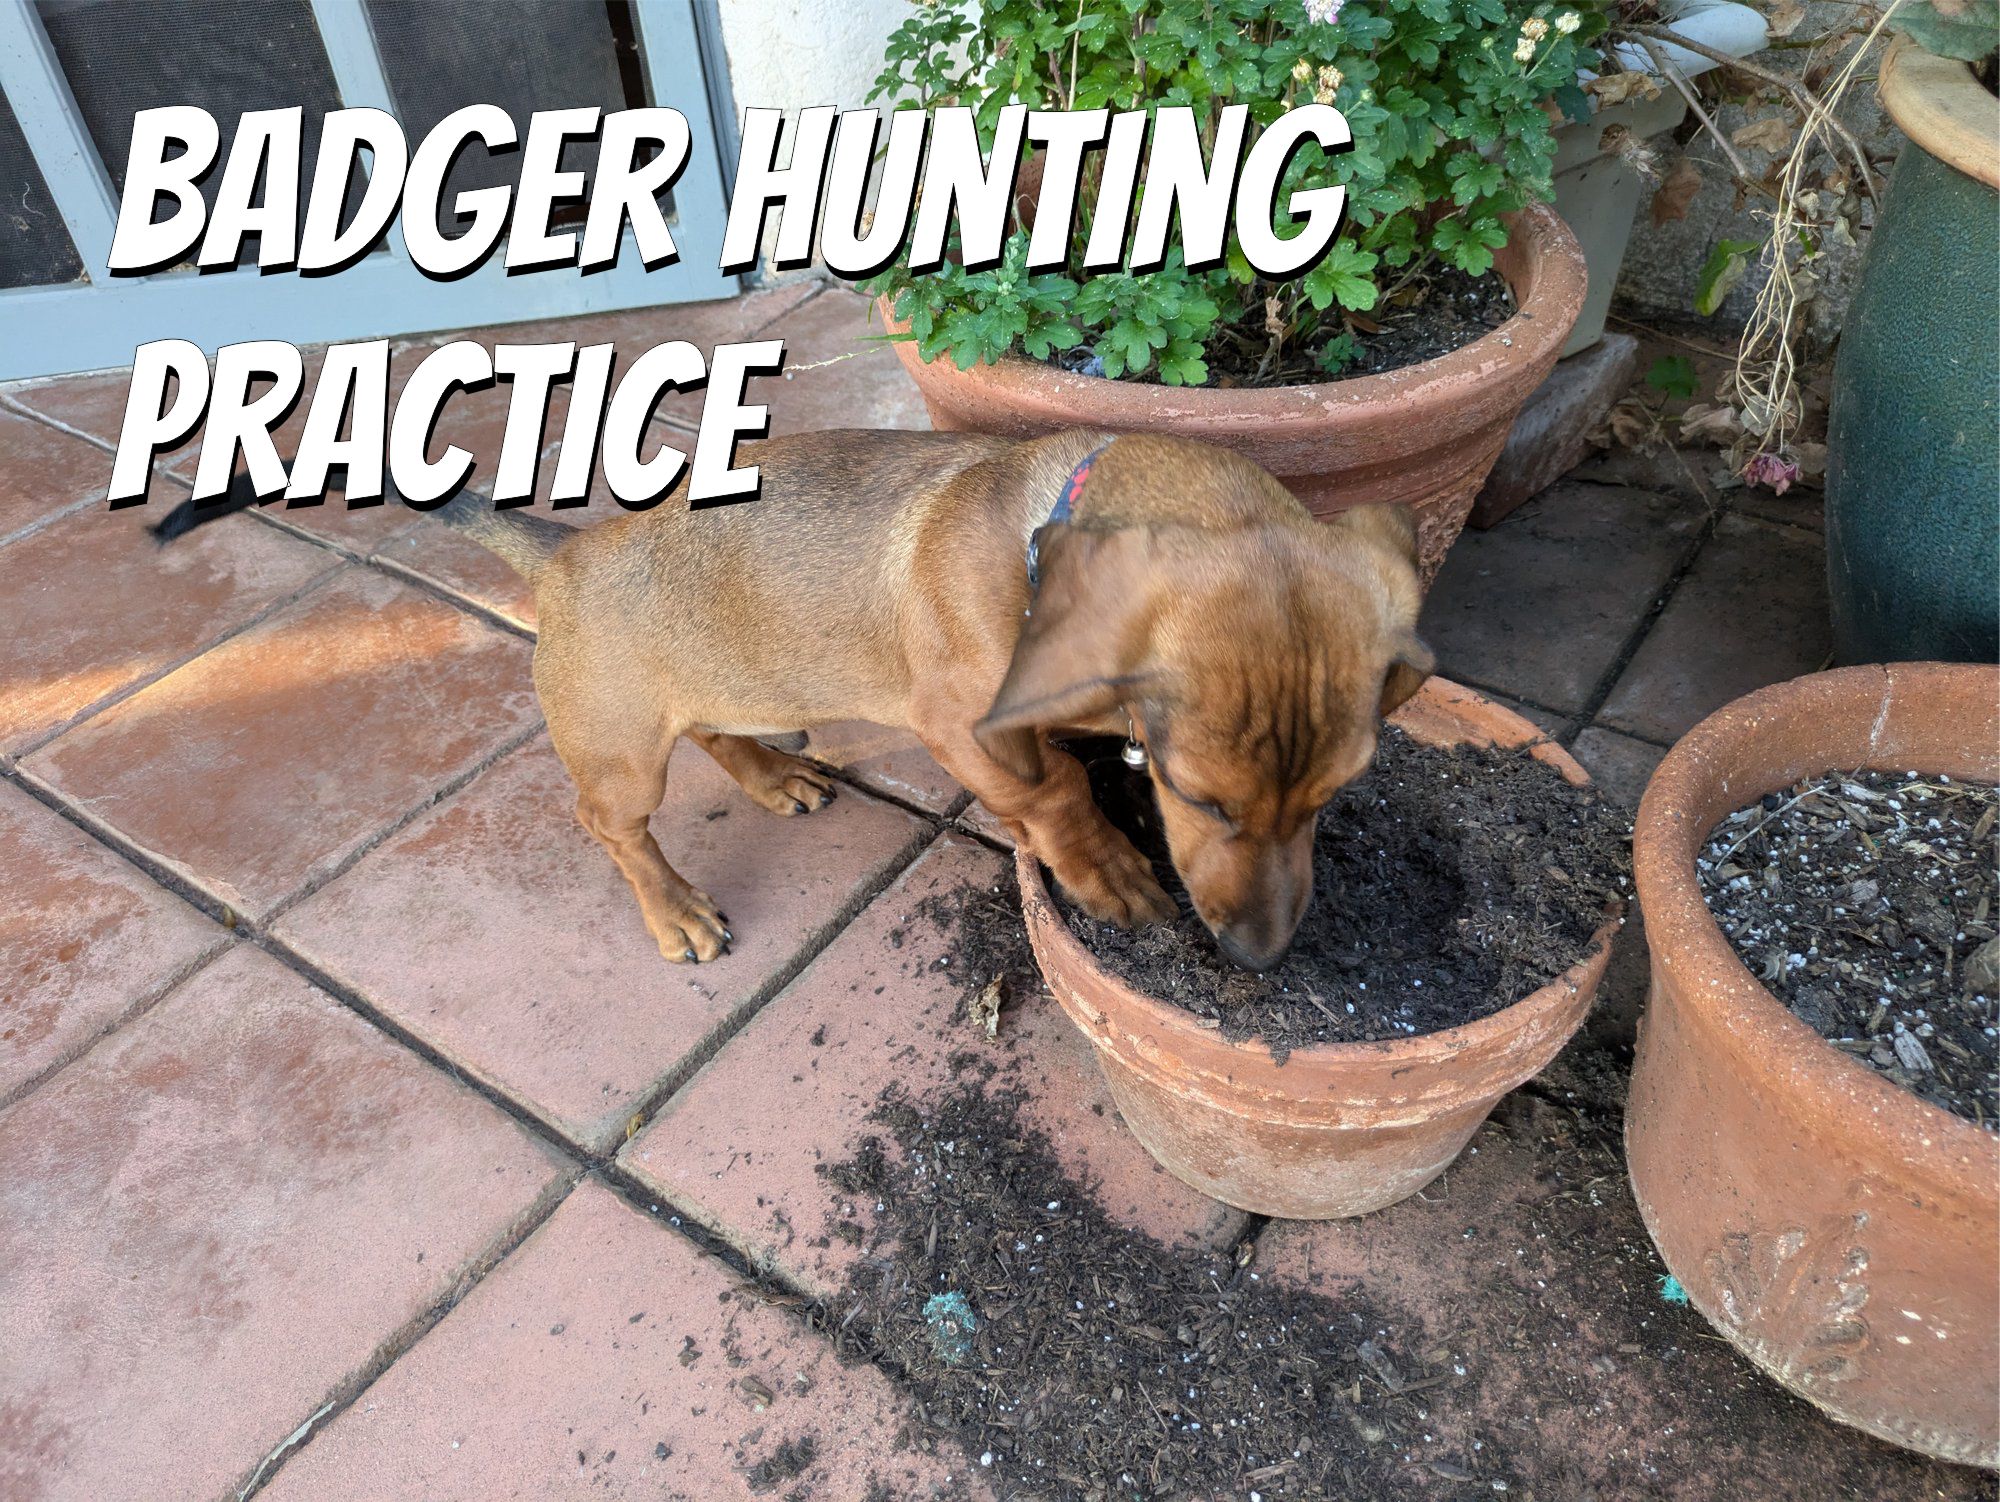 A dachshund puppy digging in a flower pot